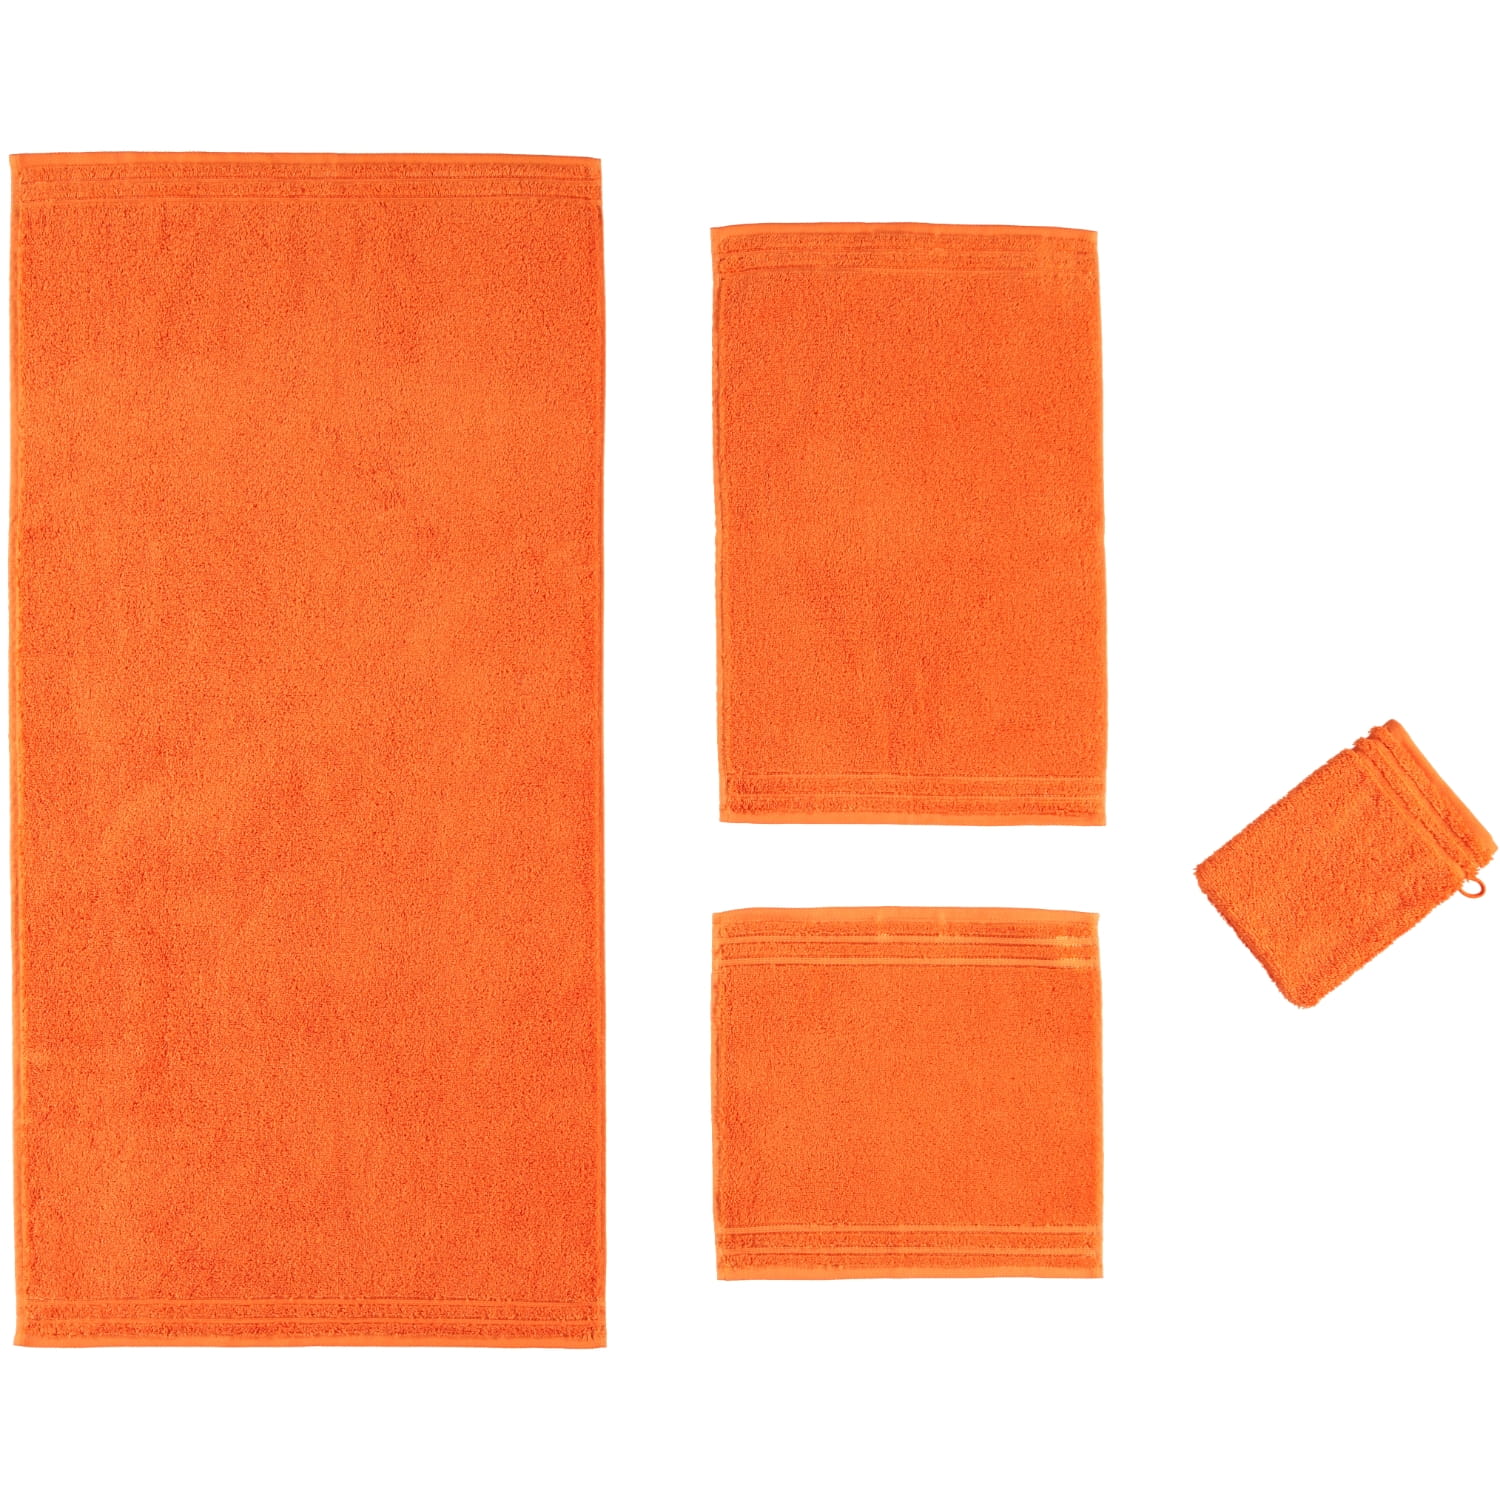 Vossen Calypso Feeling - Farbe: orange - 255 | Vossen Handtücher | Vossen |  Marken